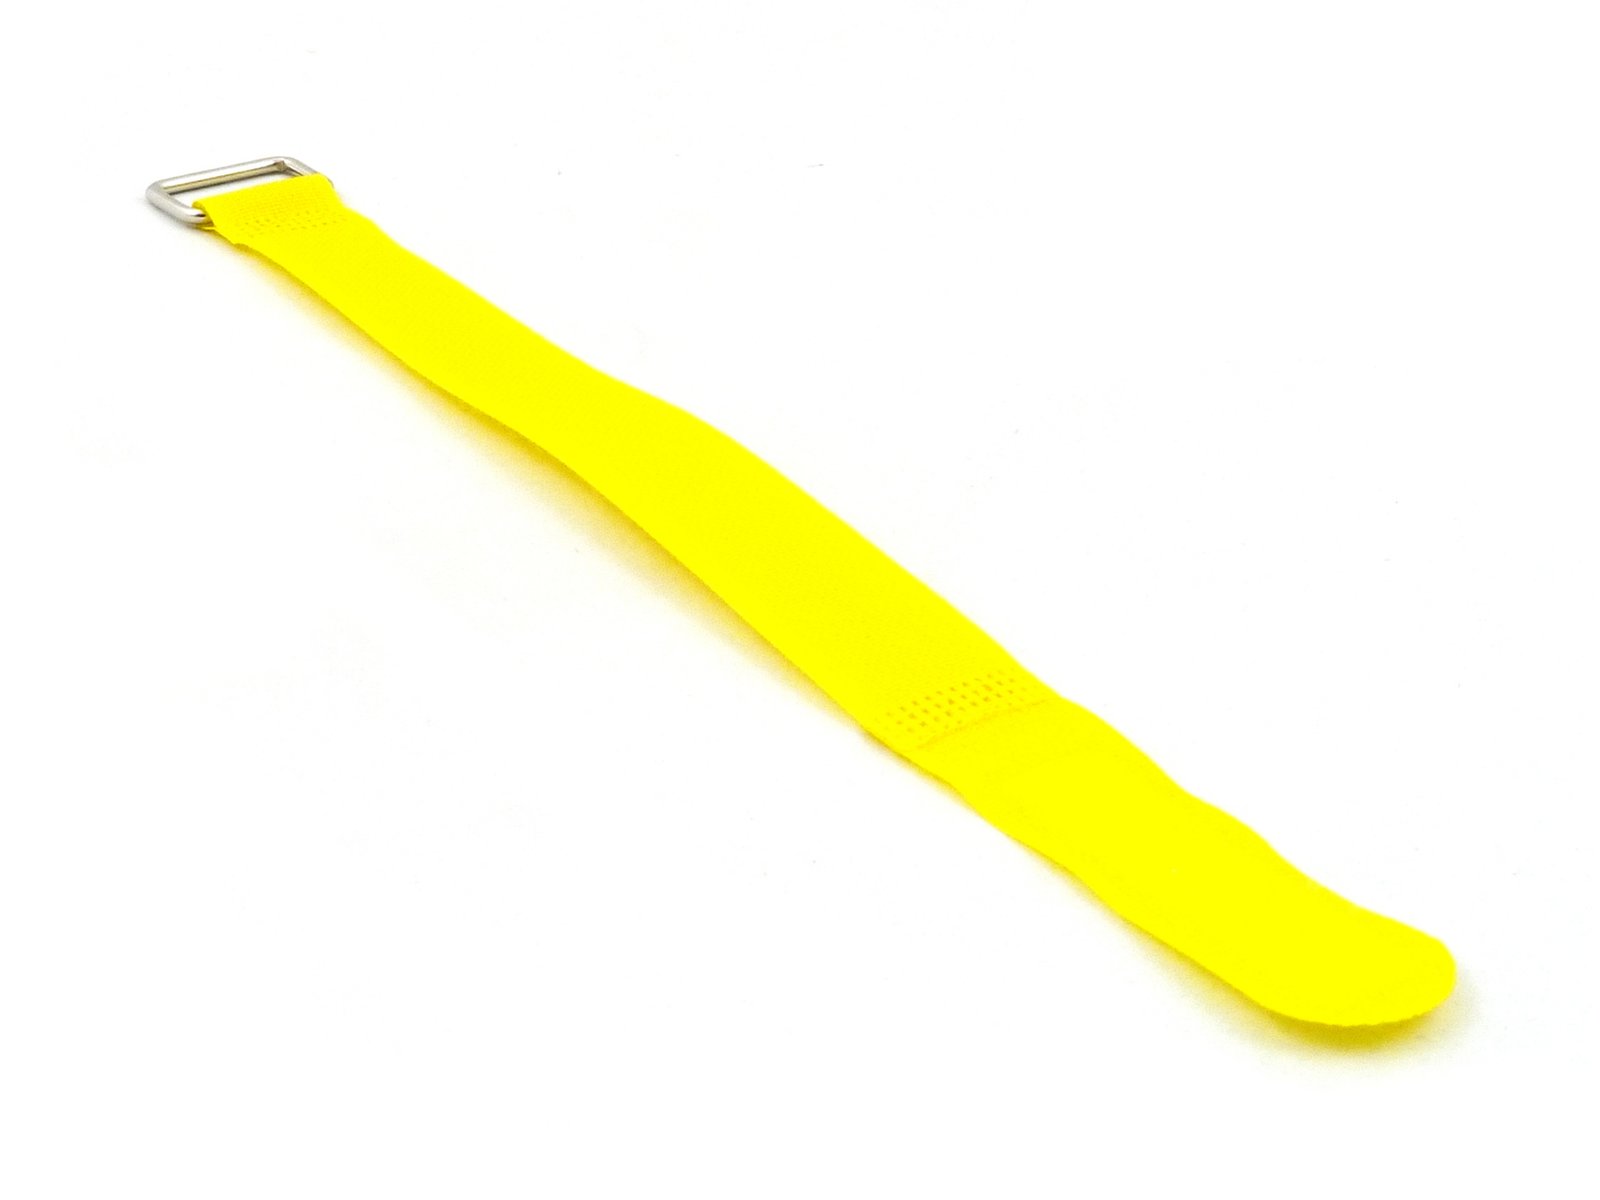 GAFER.PL Kabelbinder Klettverschluss 25x260mm 5er Pack gelb